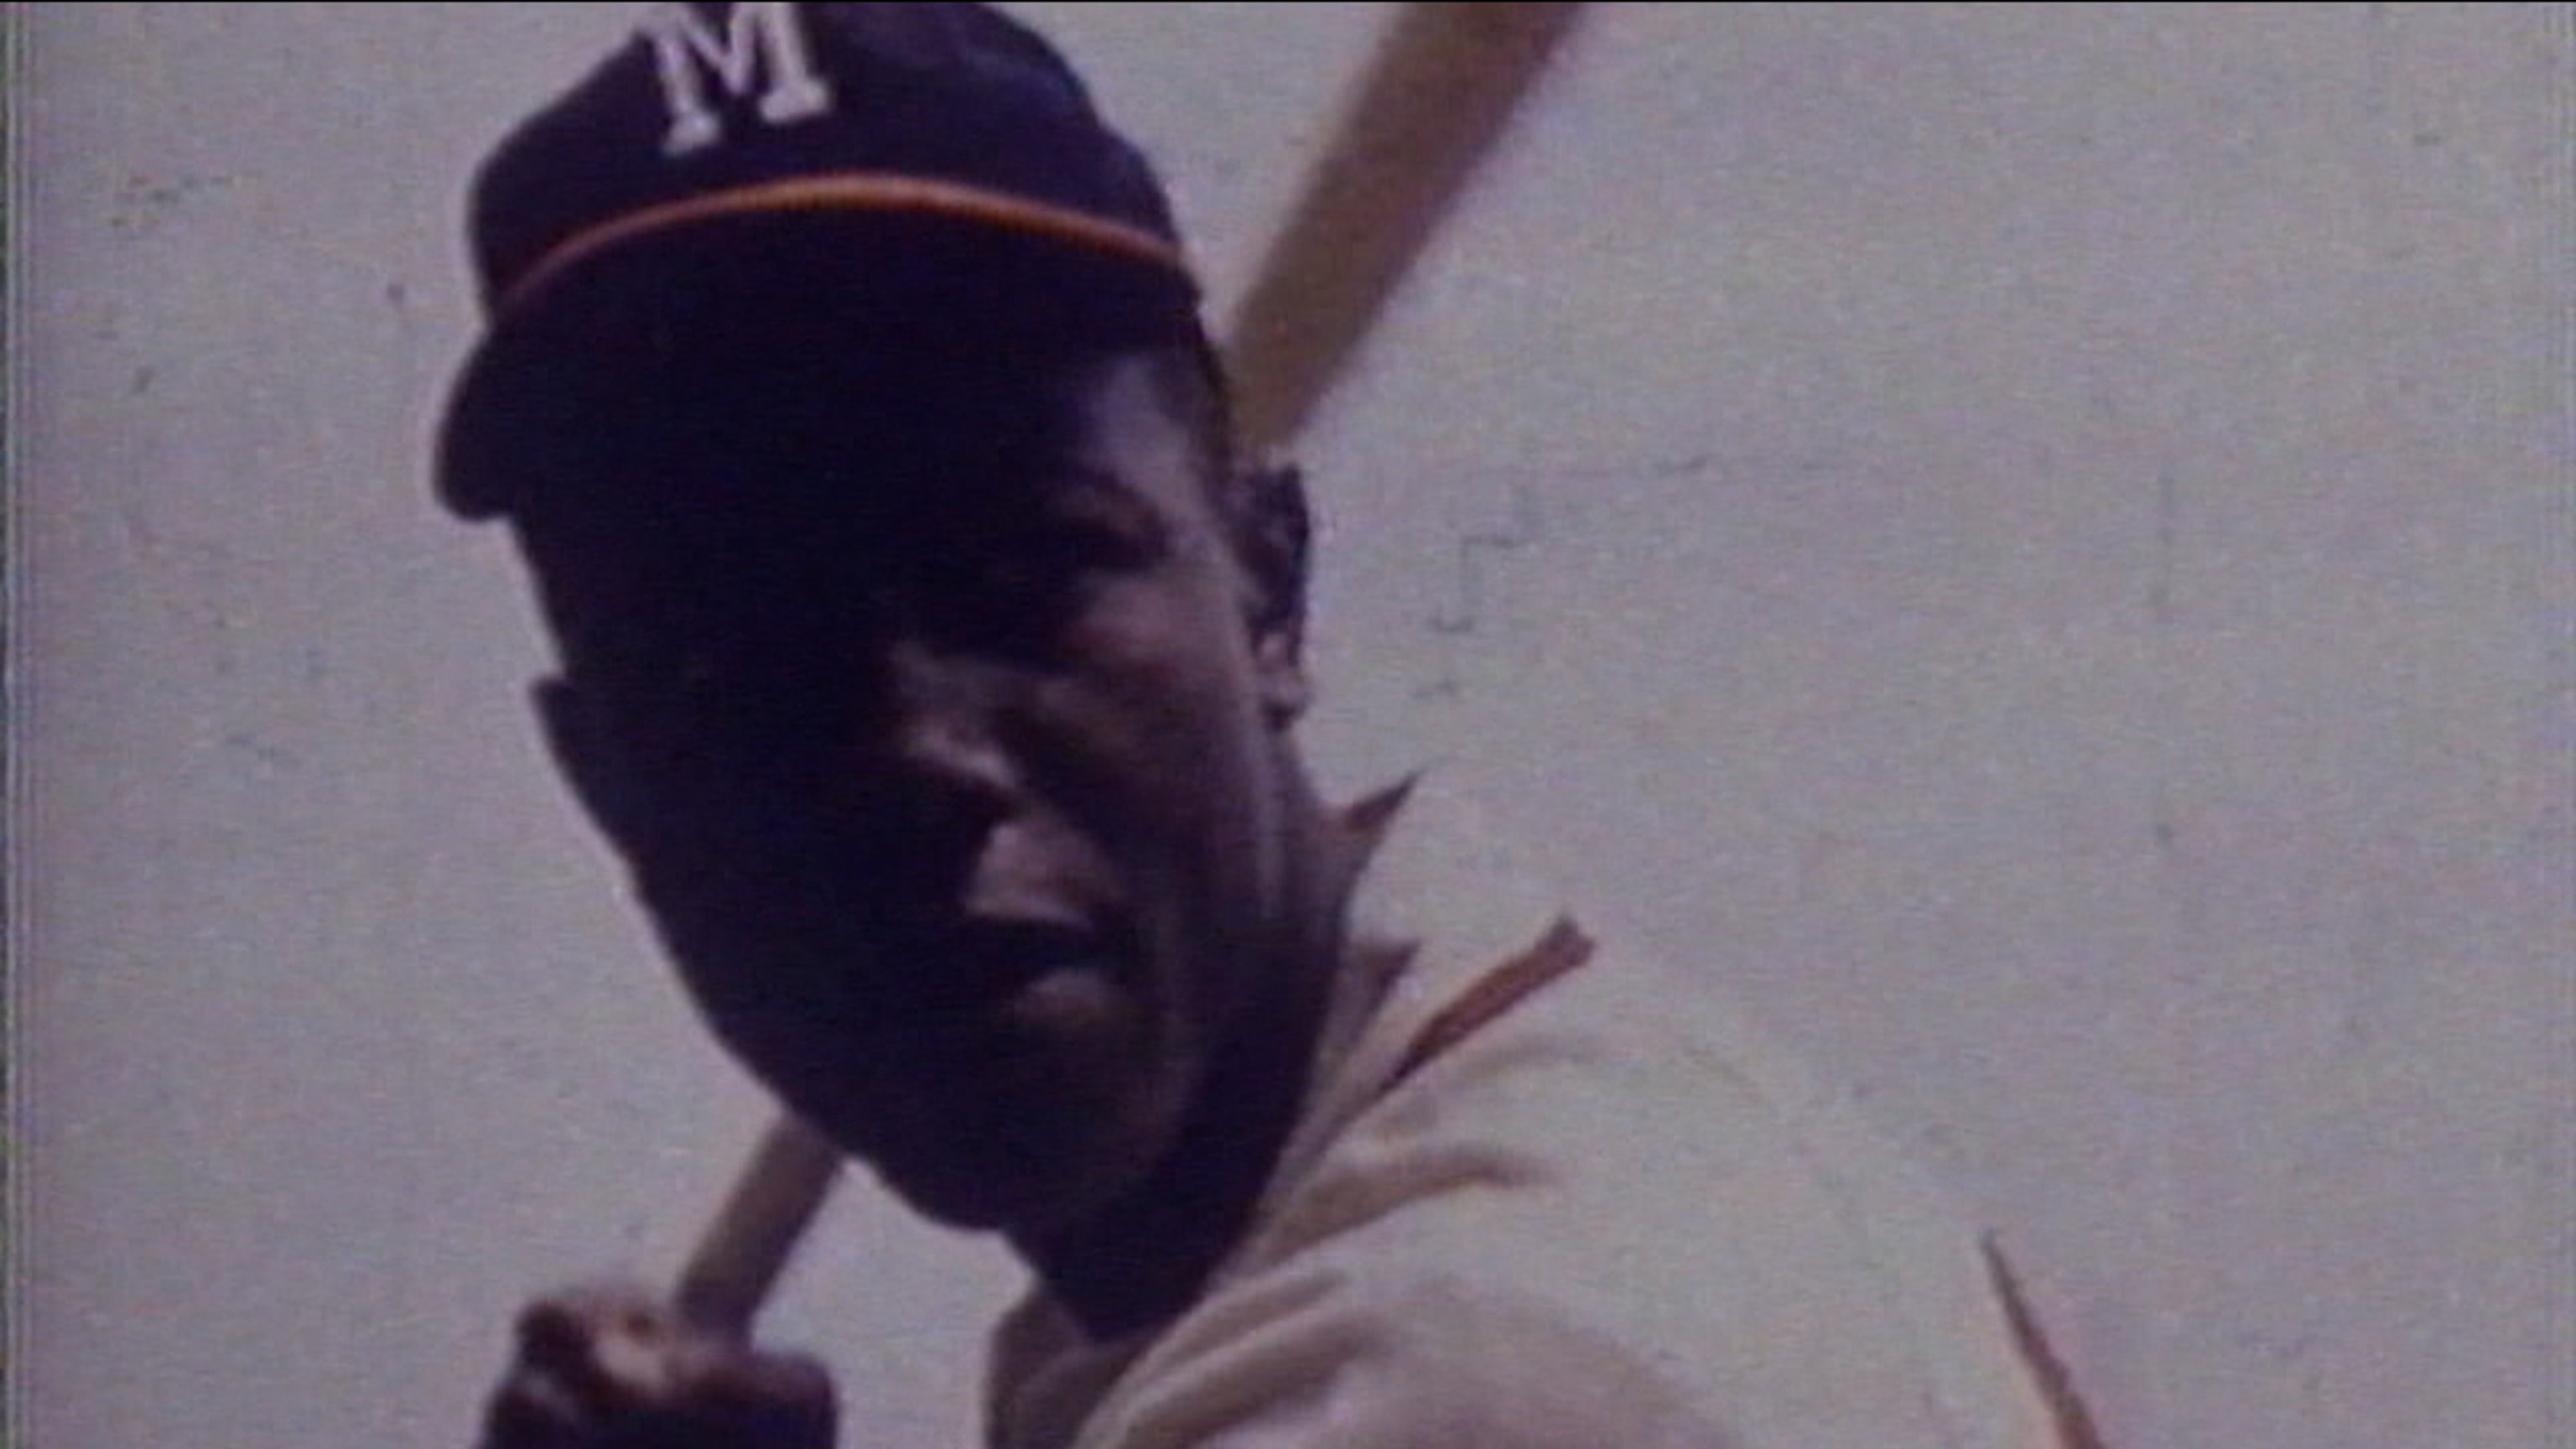 Hank Aaron Tribute Kicks off World Series Games in Atlanta - The New York  Times